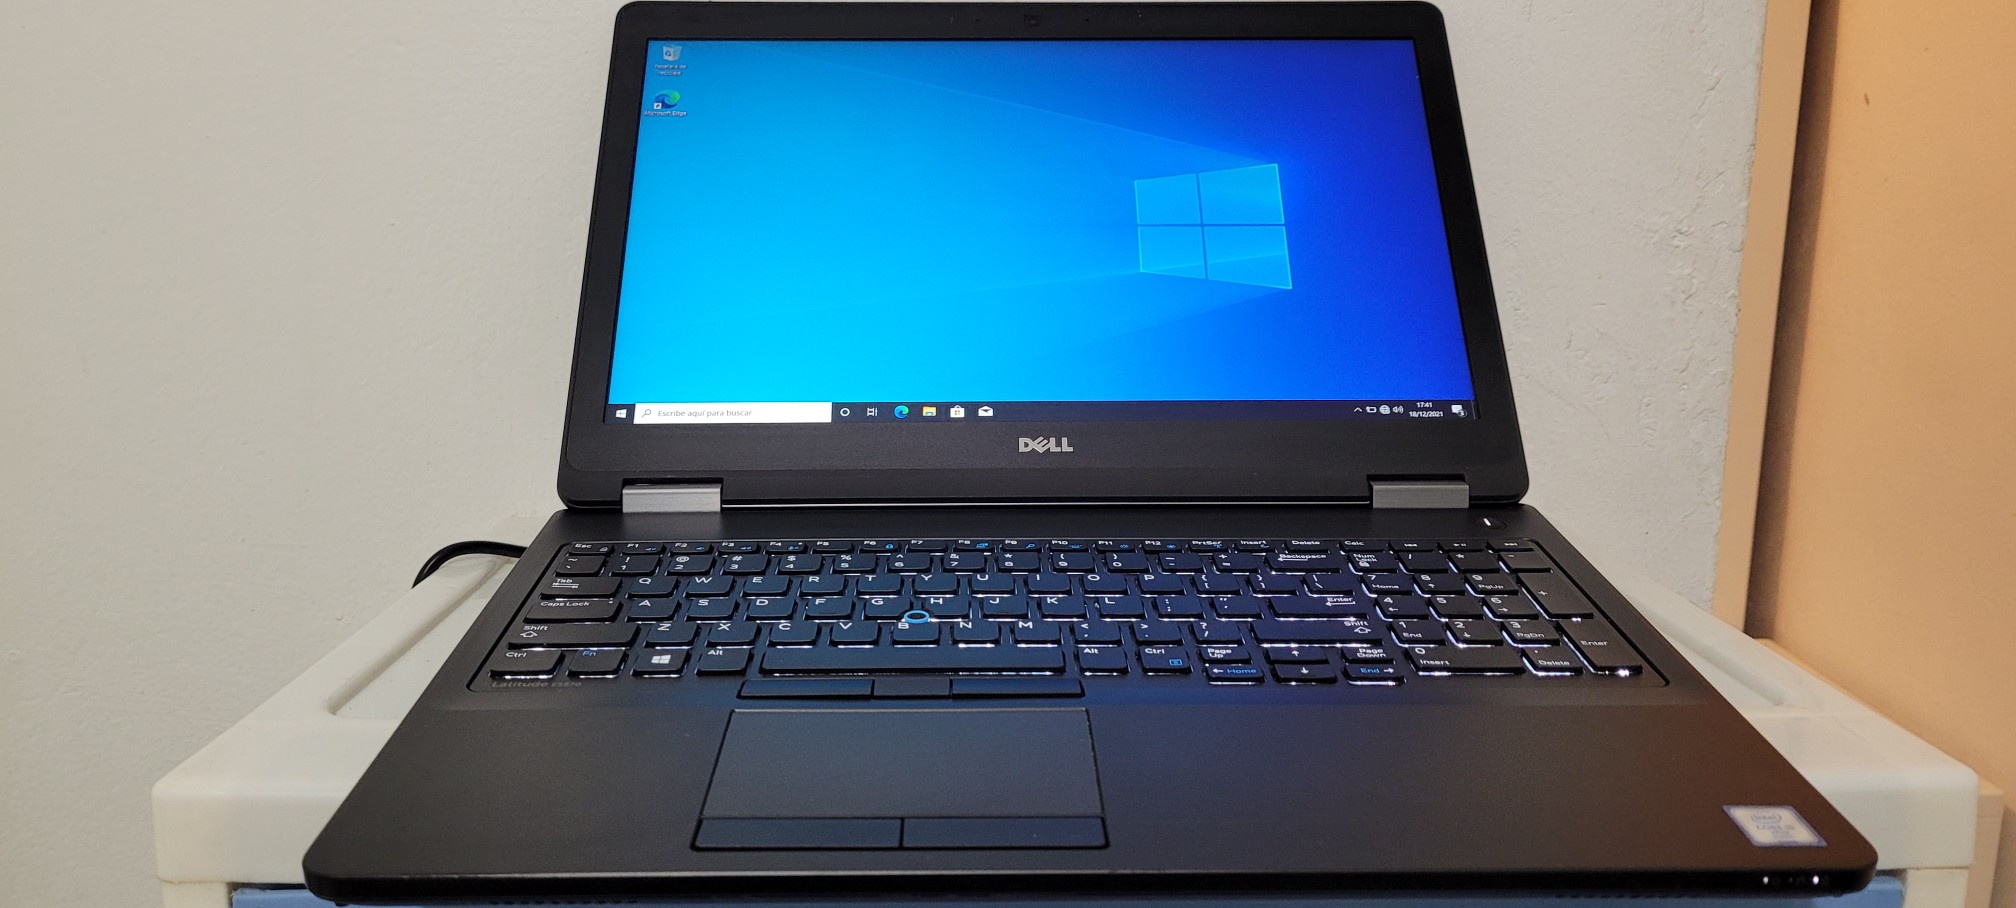 computadoras y laptops - Laptop Dell 17 Pulg Core i7 2.7ghz Ram 8gb Disco 1000gb Video 6gb 0